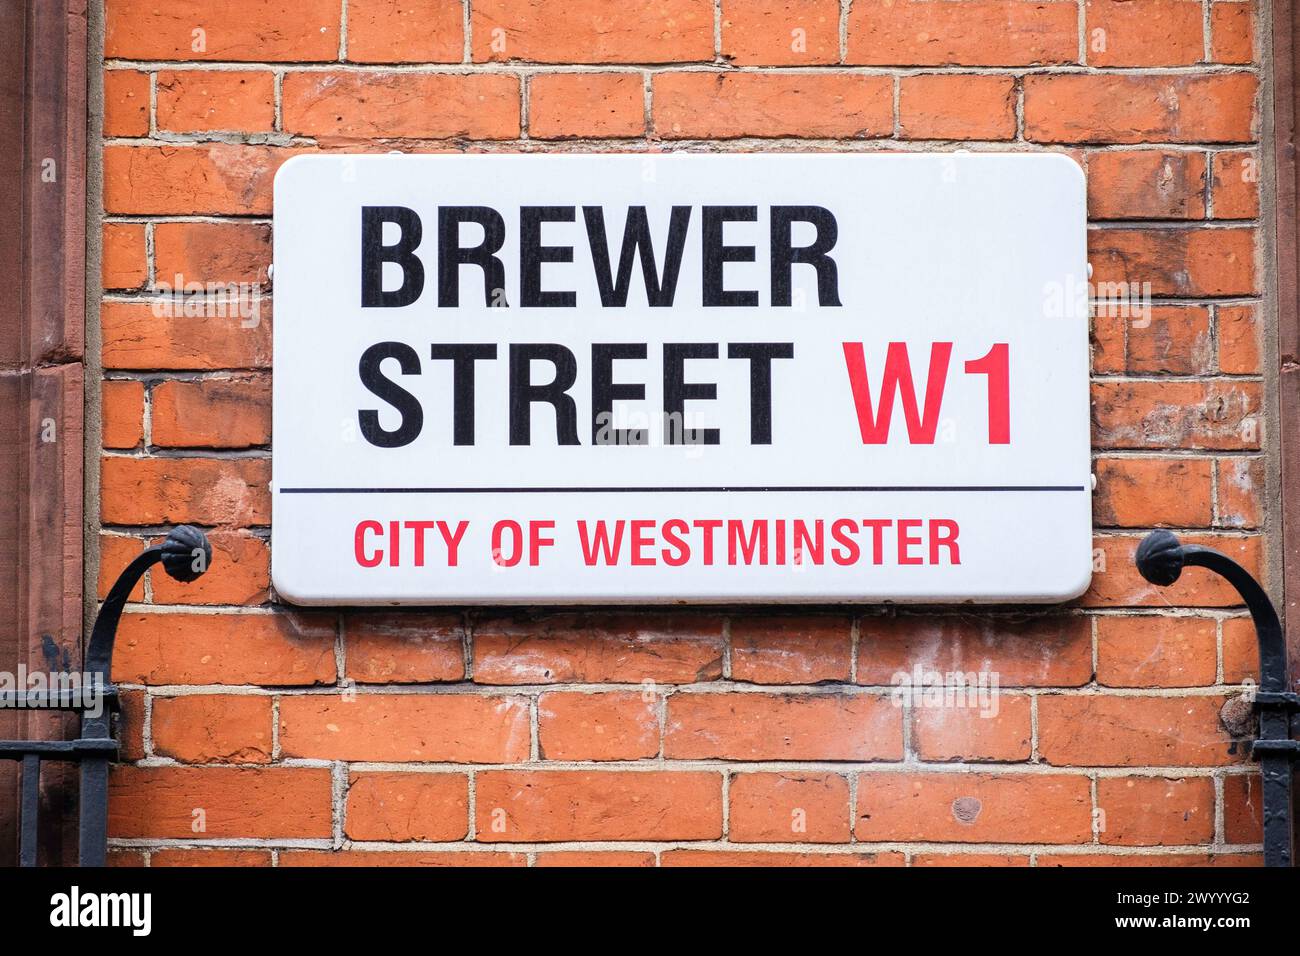 Indicazioni stradali per Londra: Brewer Street W1 Foto Stock